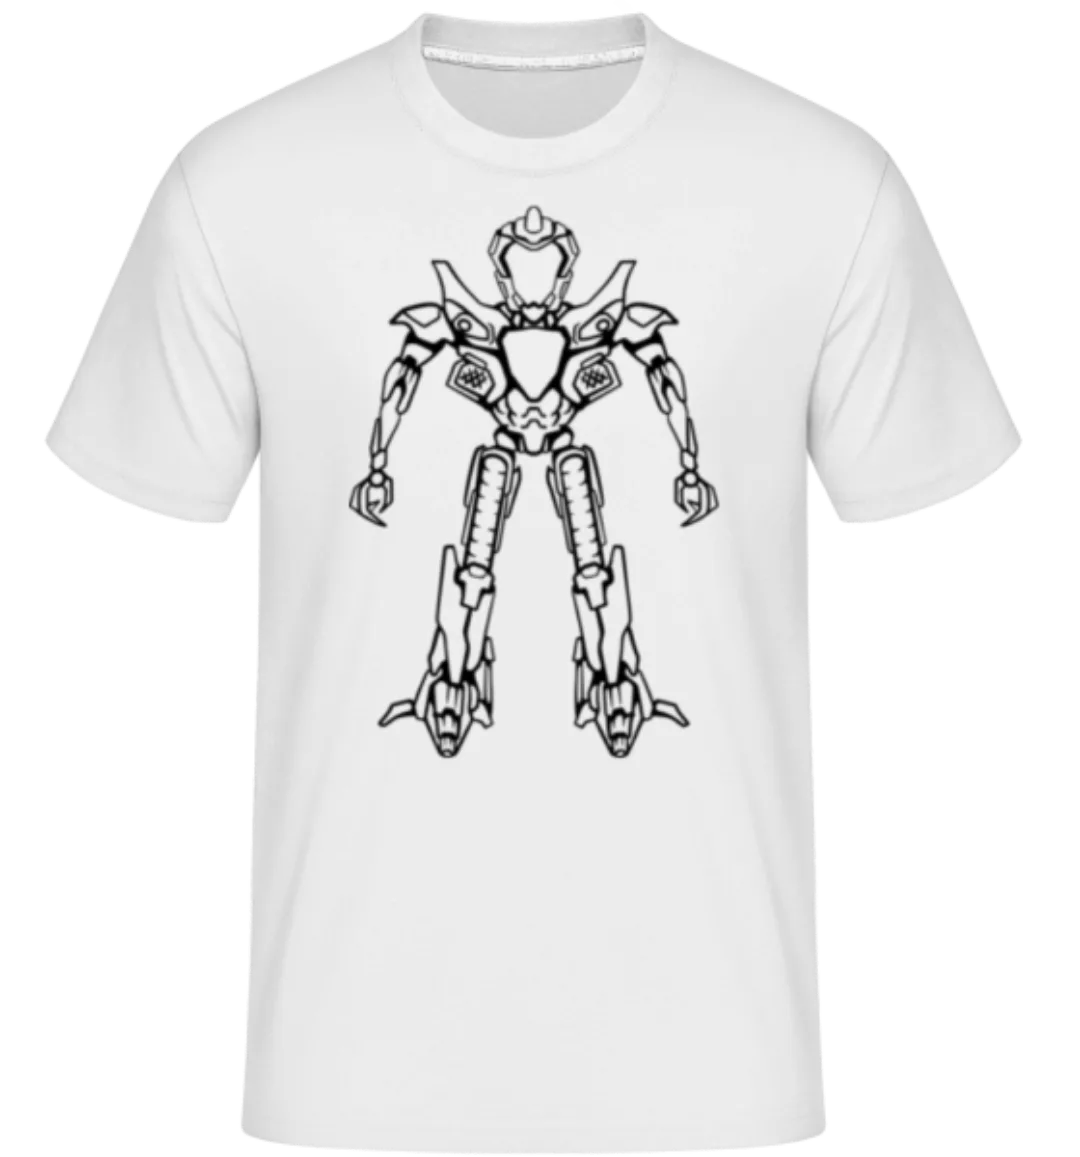 Transformer 1 Kontur · Shirtinator Männer T-Shirt günstig online kaufen